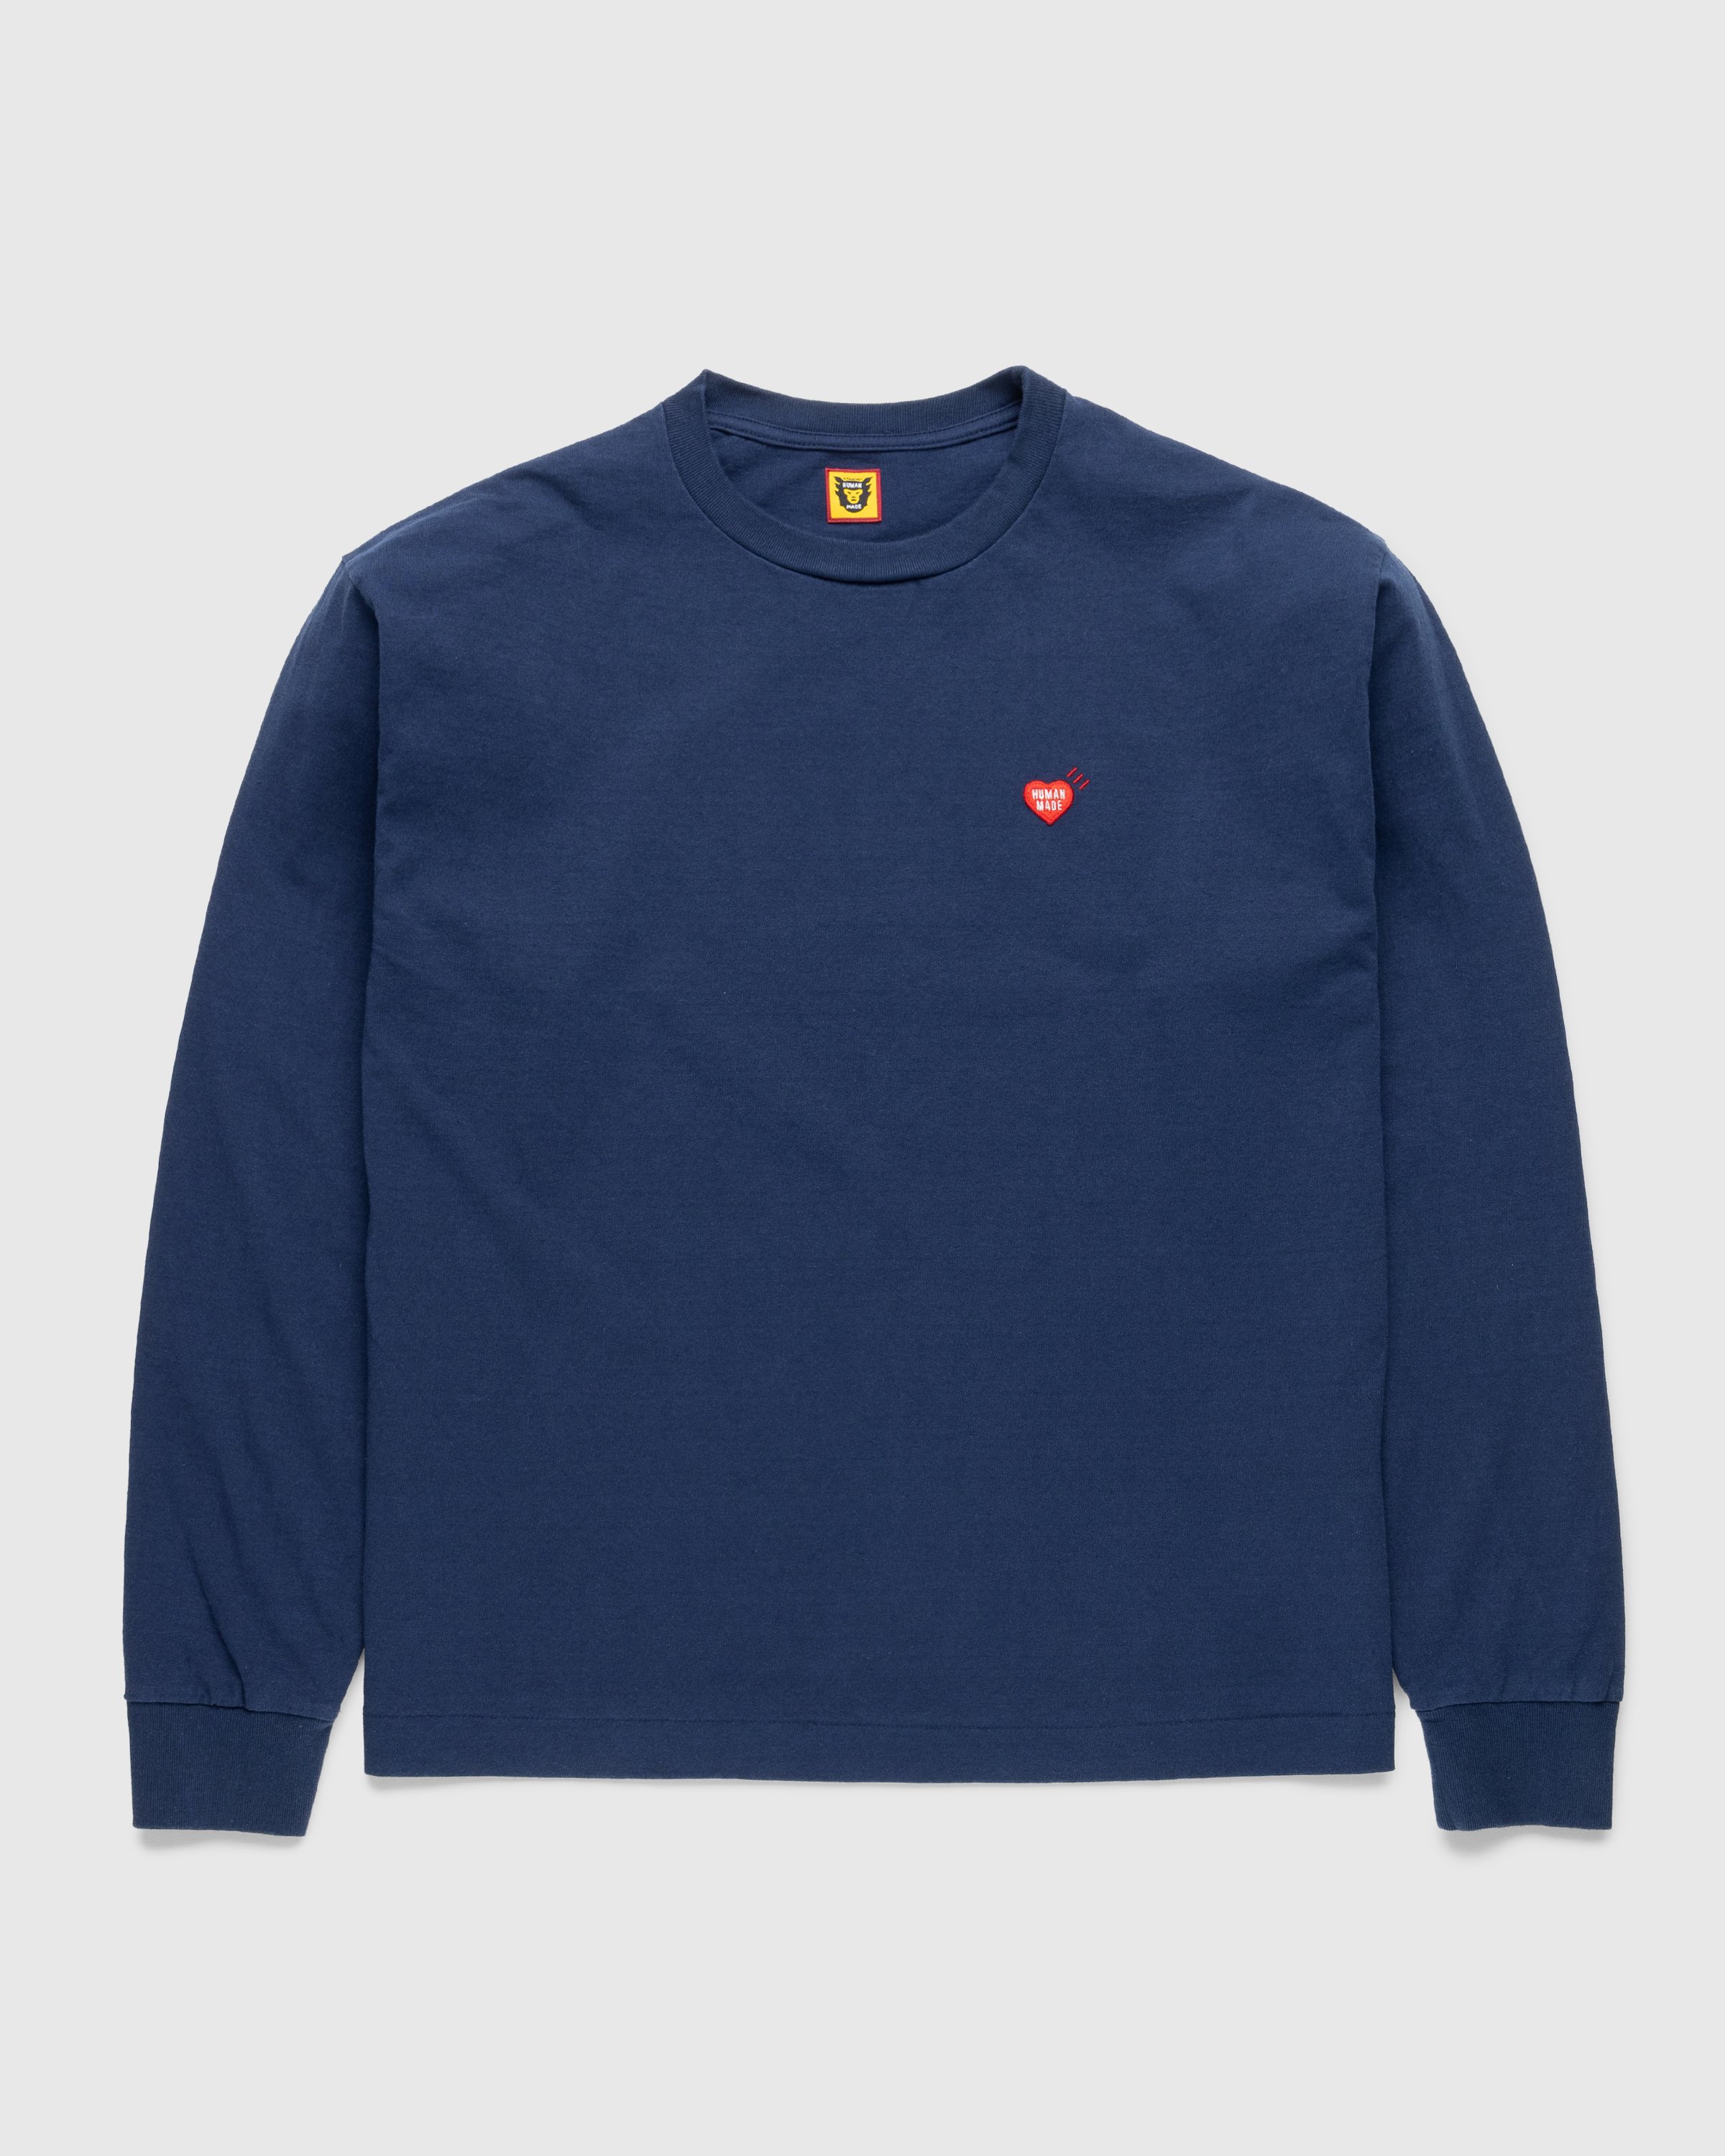 Human Made - Long-Sleeve Duck T-Shirt Navy - Clothing - Blue - Image 2